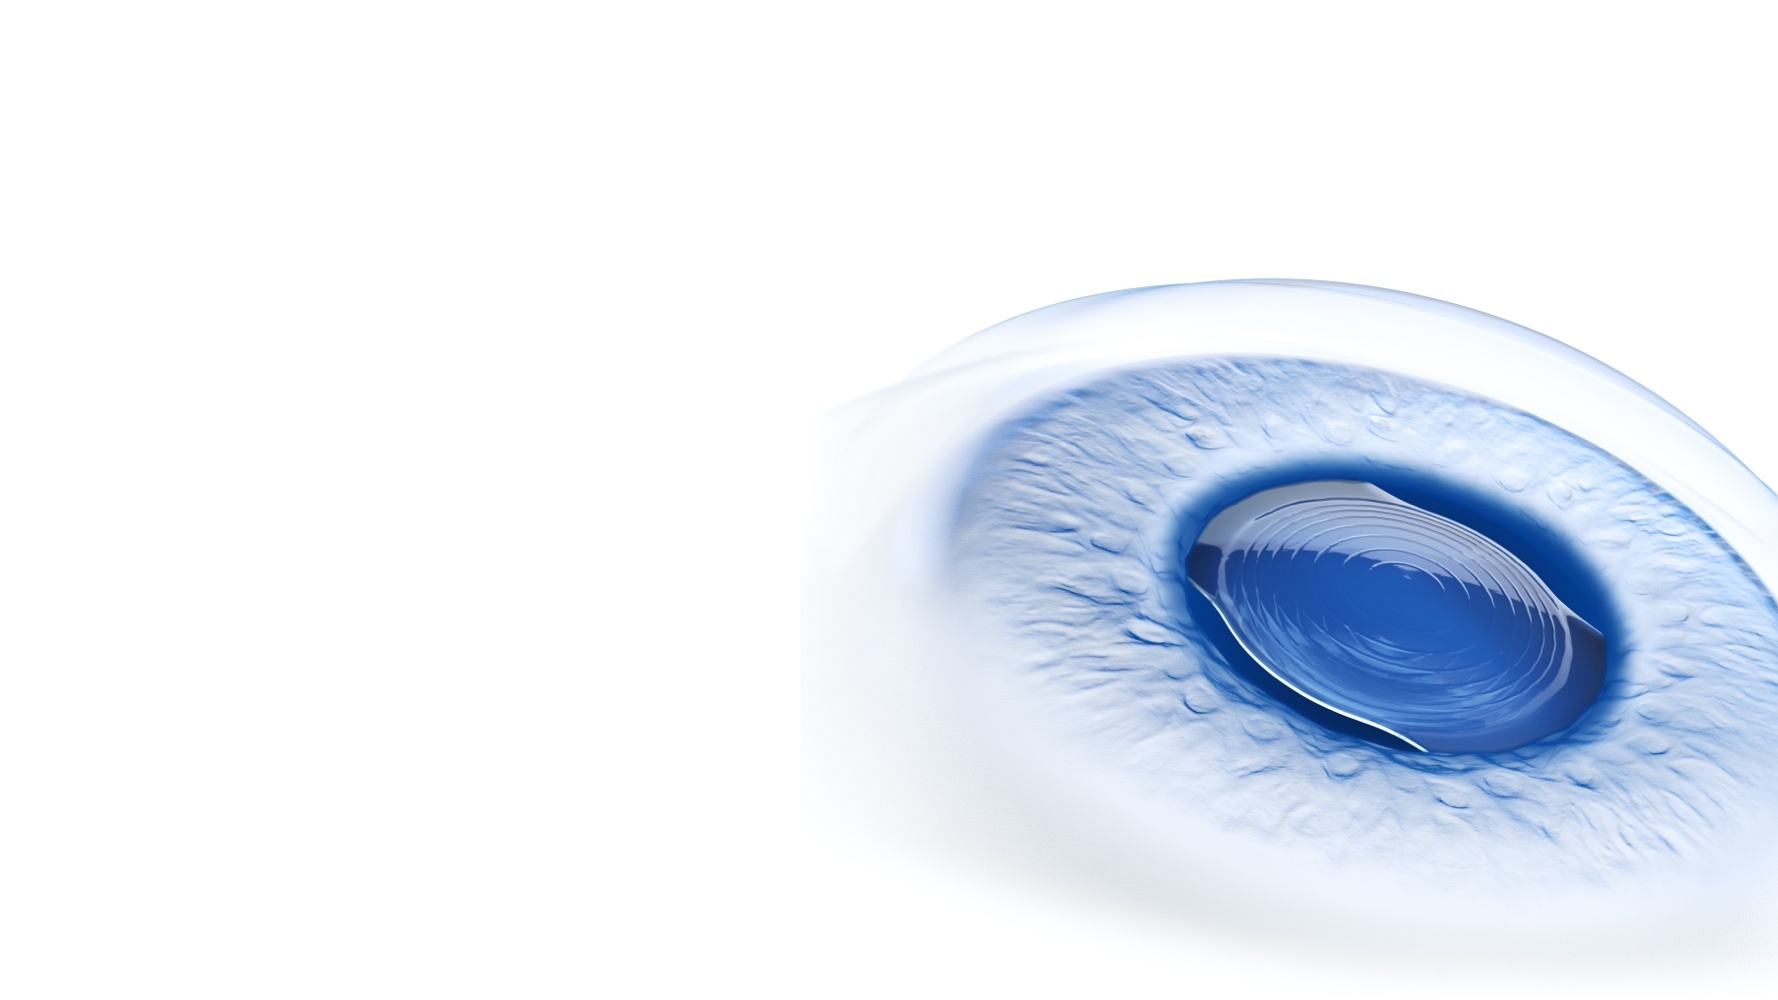 ZEISS Premium cataract workflow